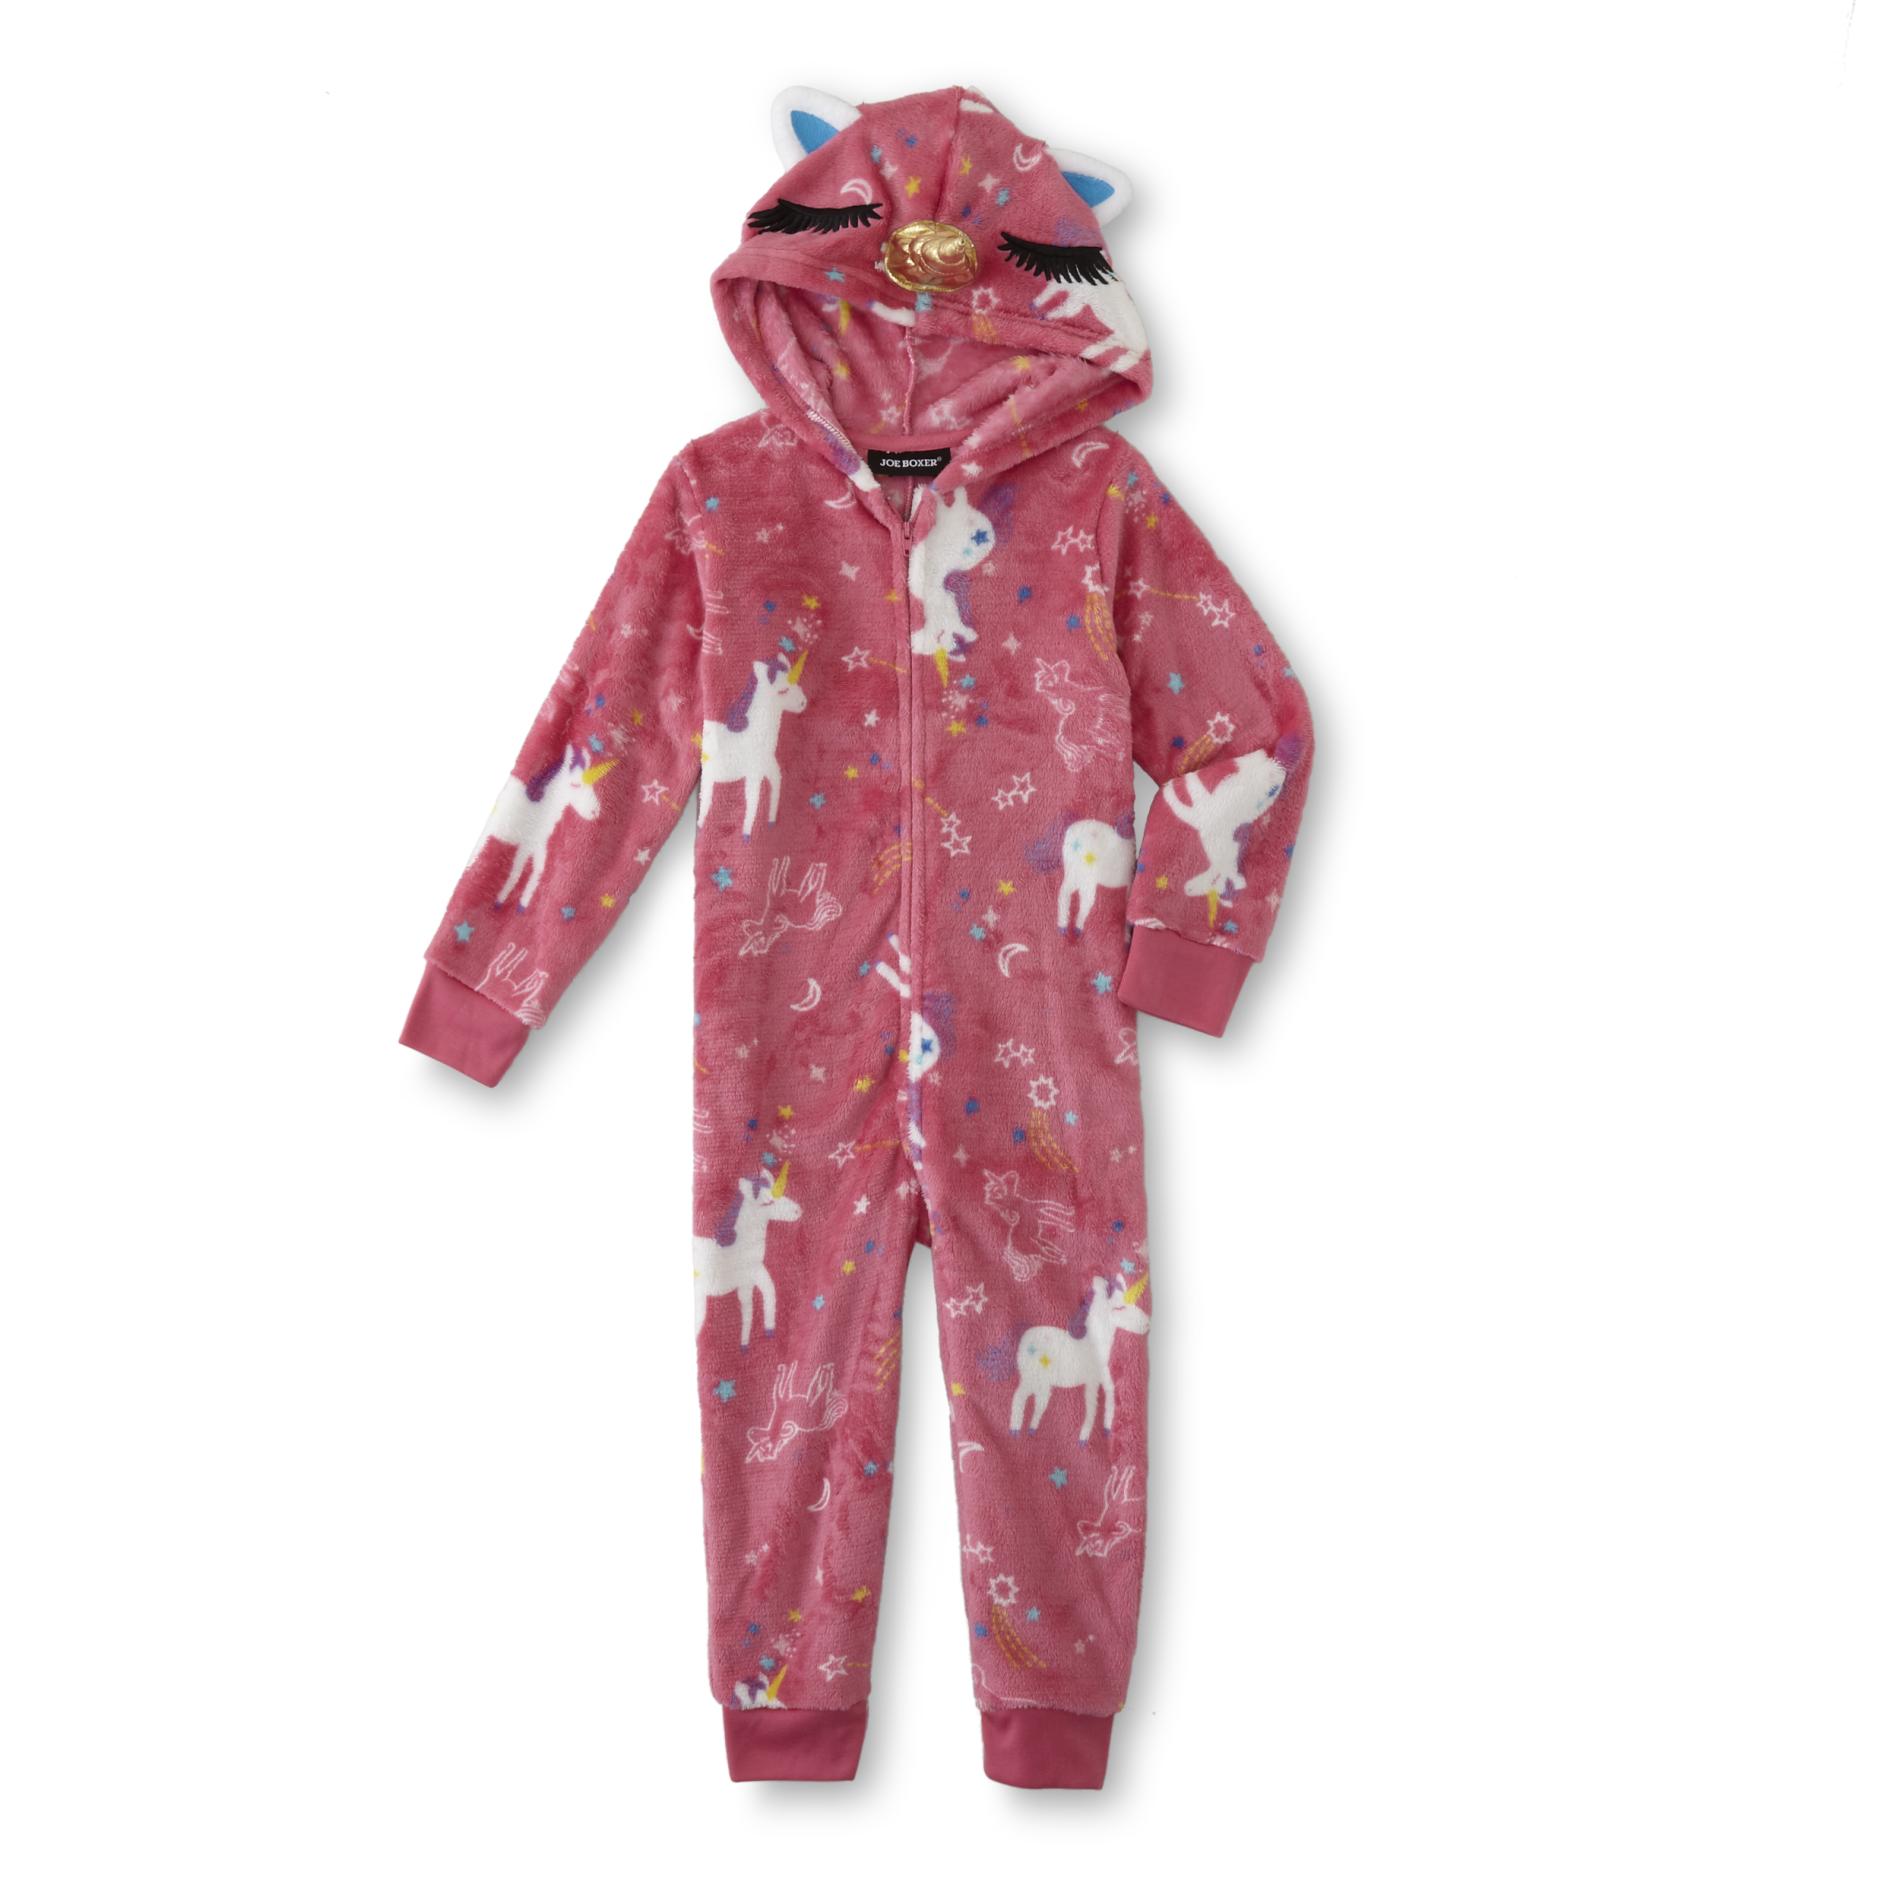 Joe Boxer Infant & Toddler Girls' Hooded Sleeper Pajamas - Unicorns